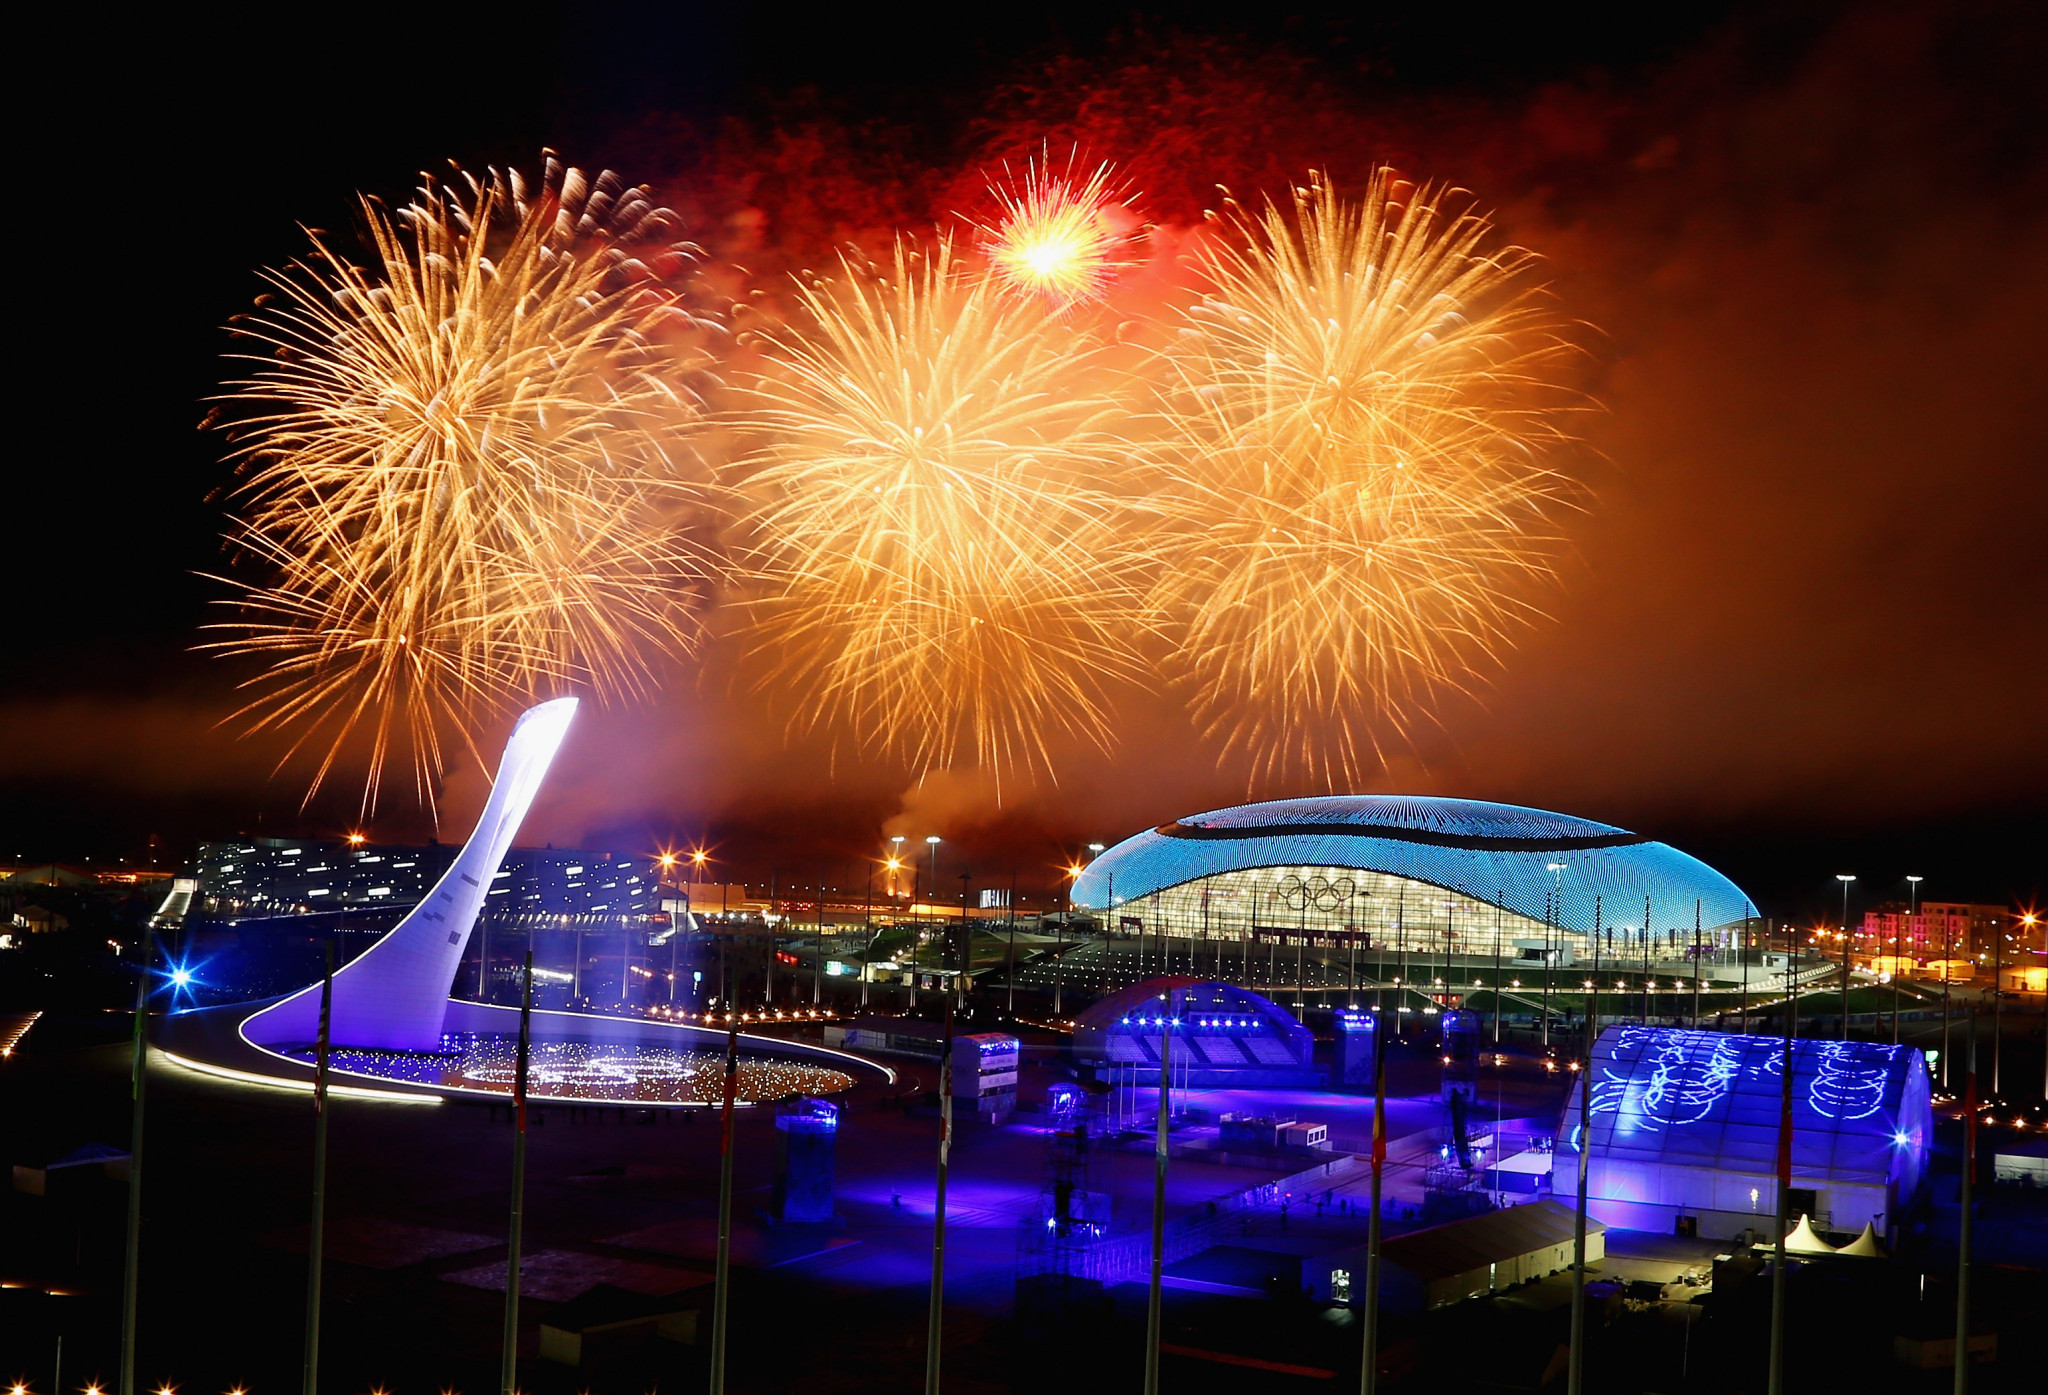 Kremlin claims Sochi 2014 best ever Summer or Winter Olympics despite doping scandal